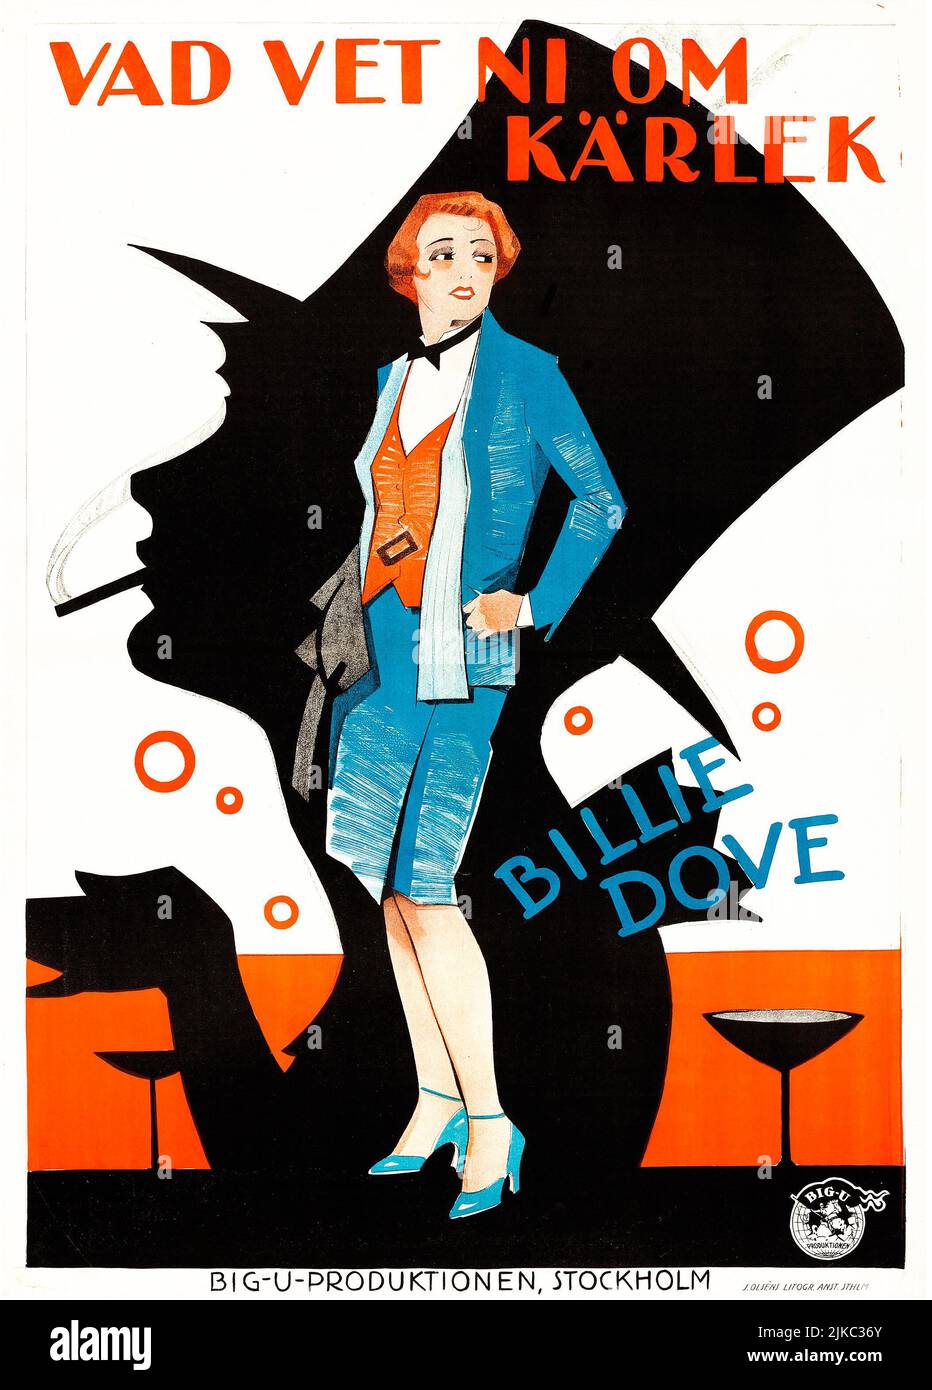 Sensation Seekers (Big-U, 1927). Swedish movie poster 'Vad vet ni om karlek'. Billie Dove. Stock Photo